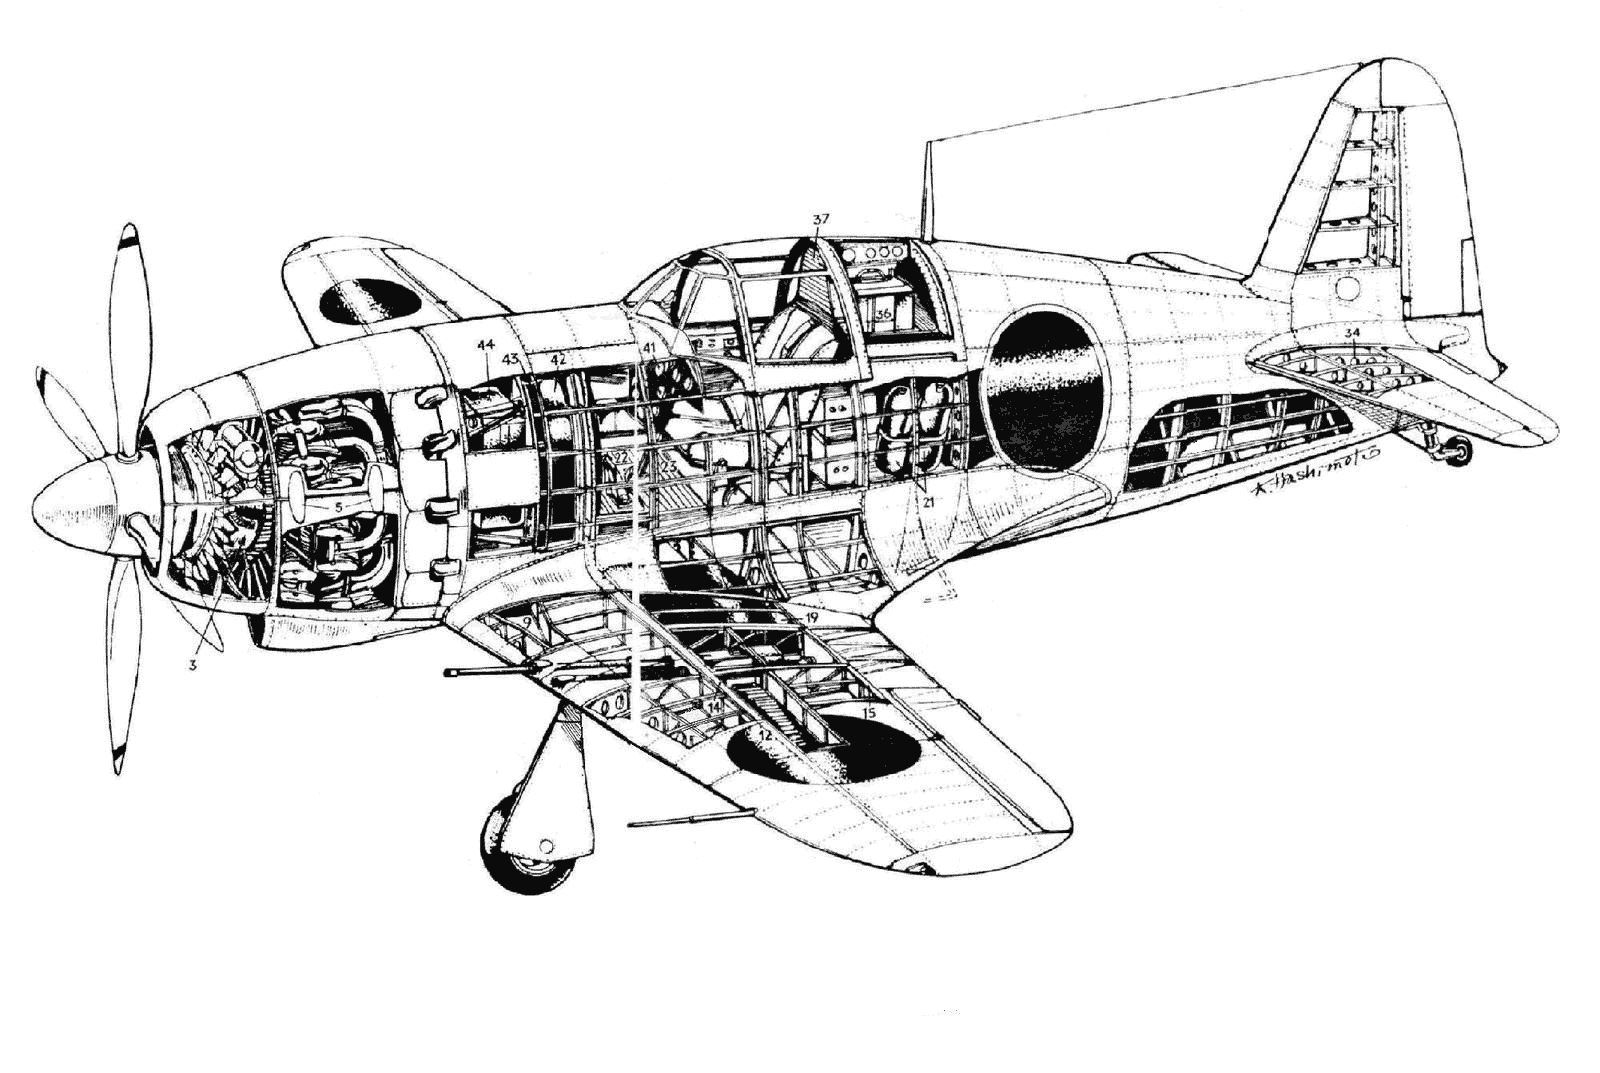 Mitsubishi J2M3 Raiden cutaway drawing